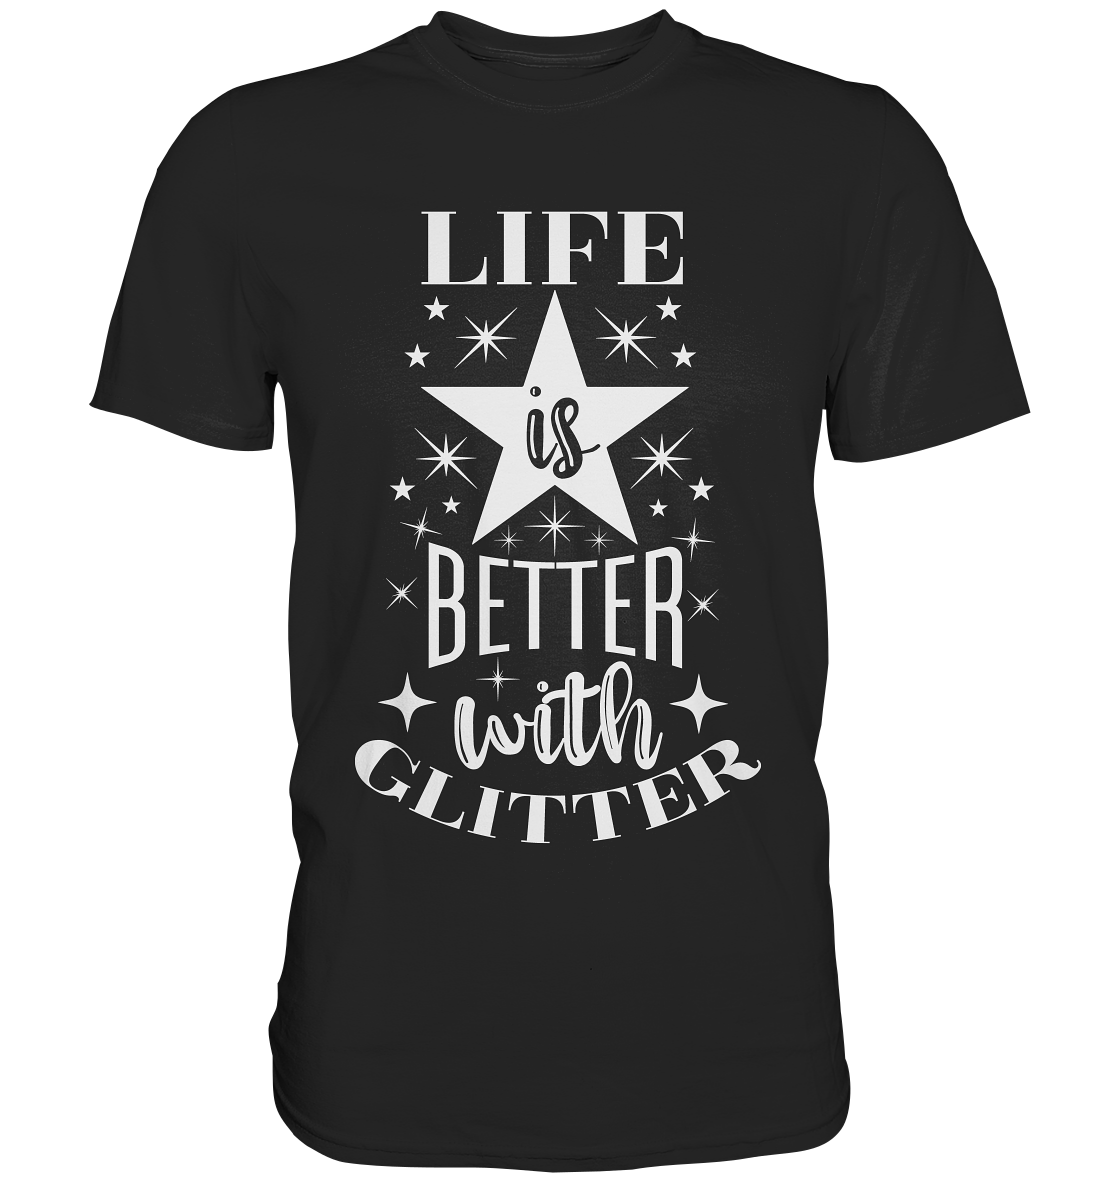 Life is better with glitter. Einhorn - Premium Shirt